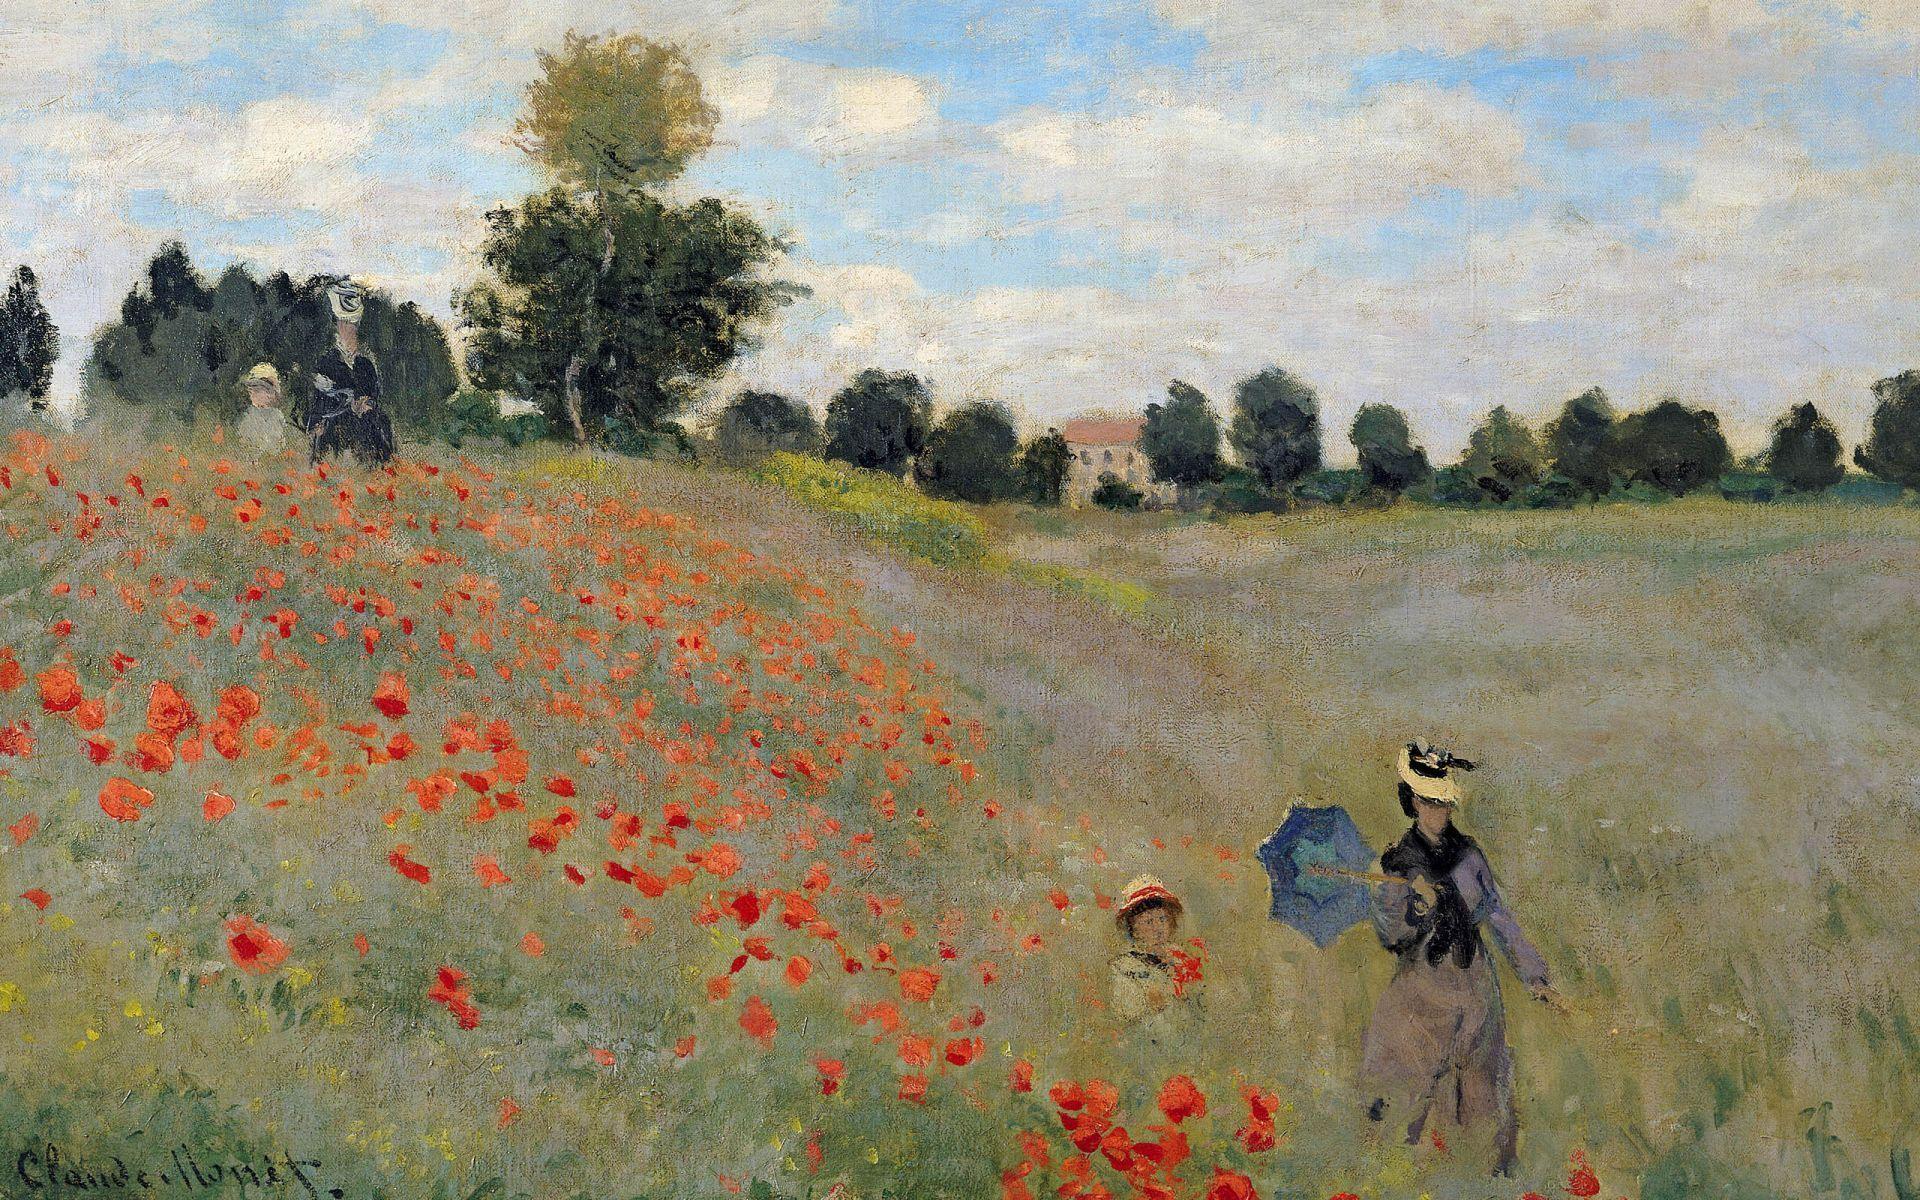 Wallpaper Wild Poppies By Claude Monet Desktop. High Quality